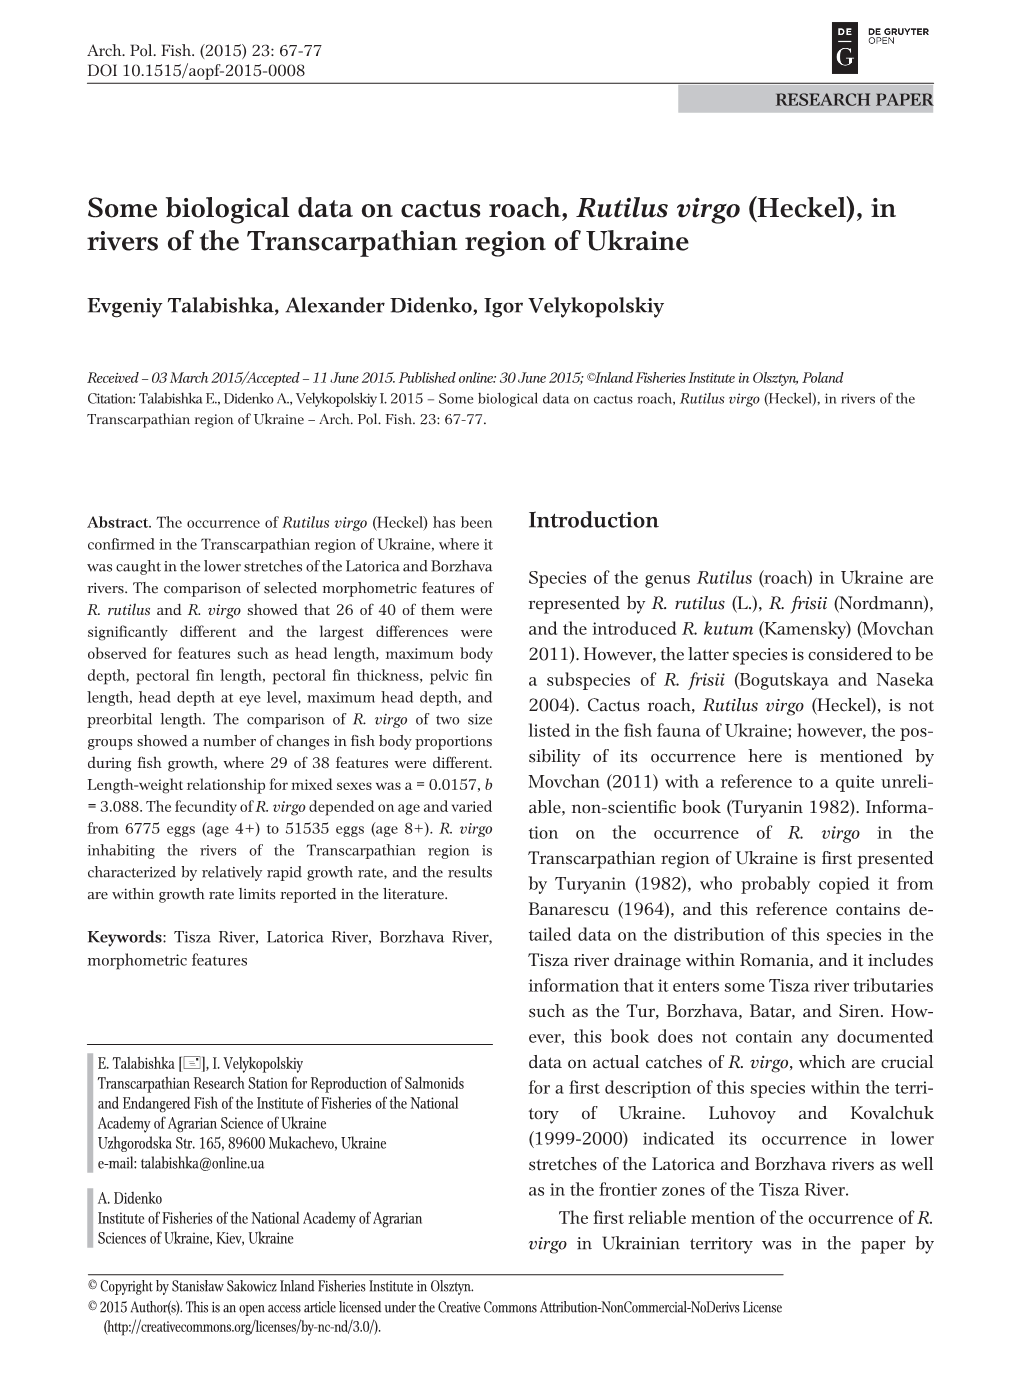 Some Biological Data on Cactus Roach, Rutilus Virgo (Heckel), in Rivers of the Transcarpathian Region of Ukraine